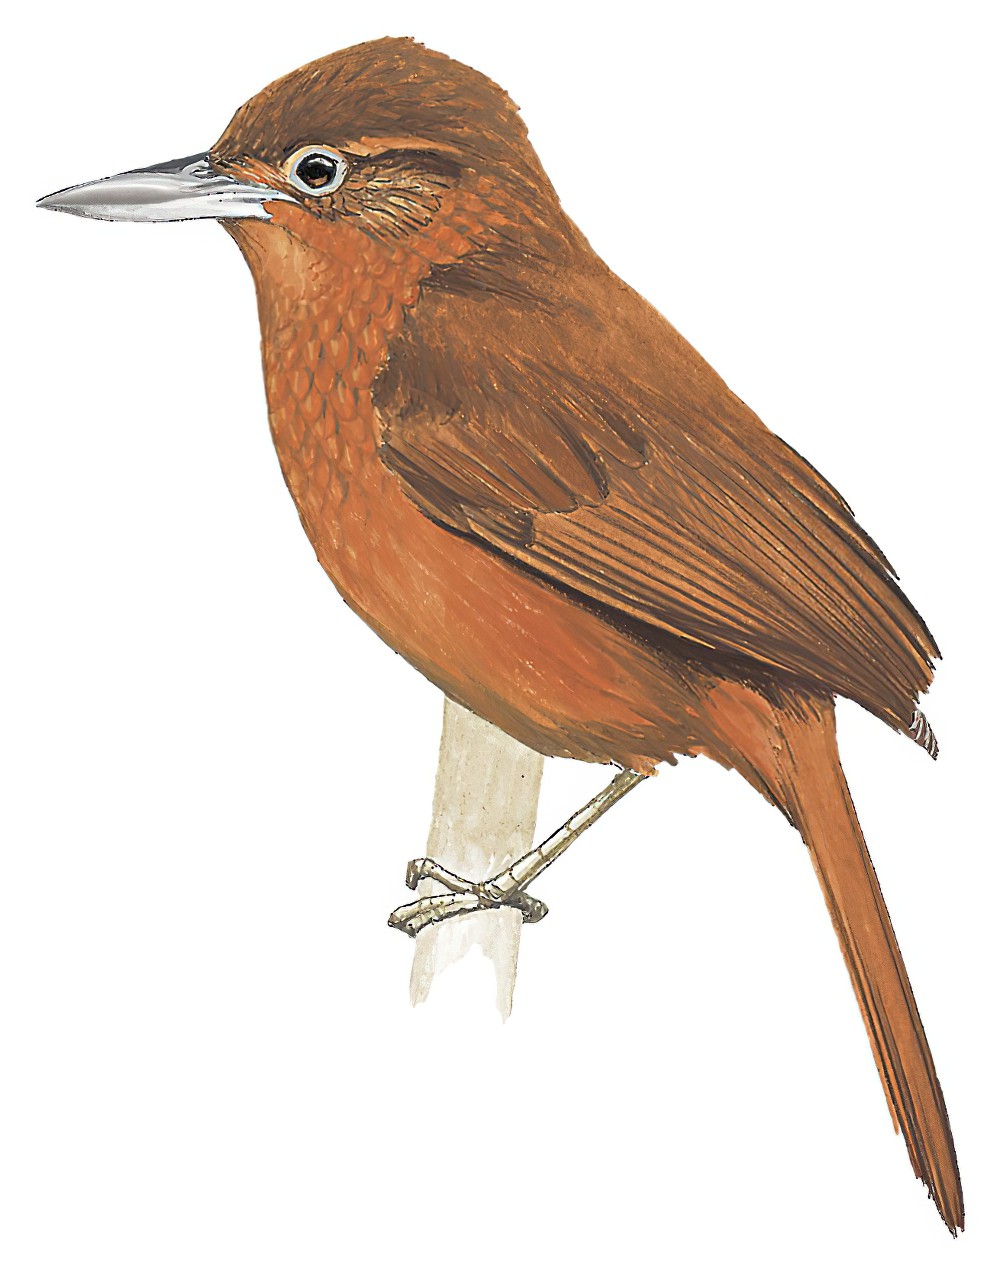 秘鲁拾叶雀 / Peruvian Recurvebill / Syndactyla ucayalae